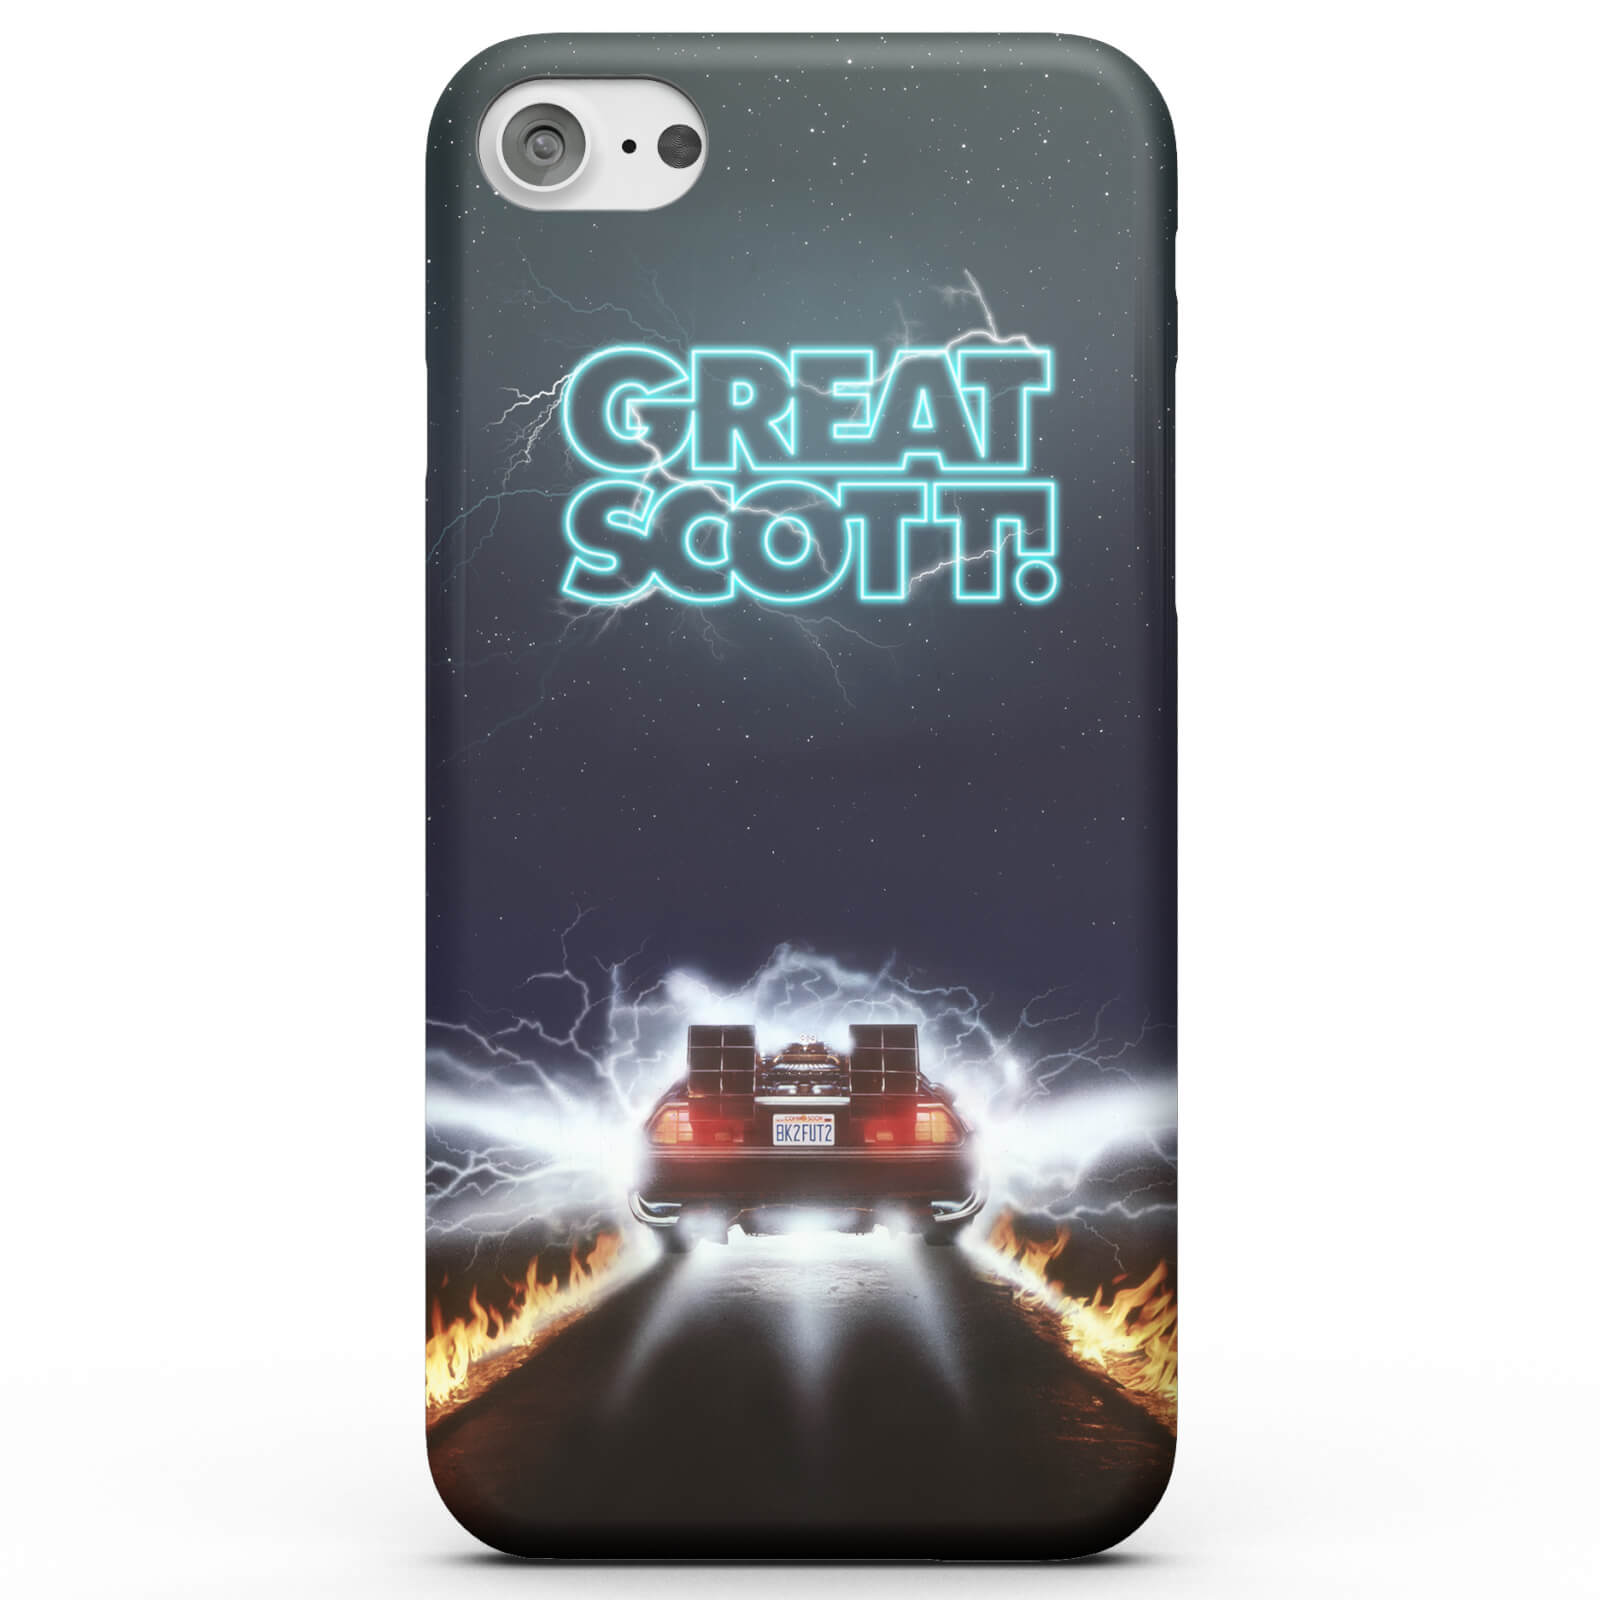 Funda Móvil Regreso al futuro Great Scott para iPhone y Android - iPhone 6 Plus - Carcasa rígida - Mate